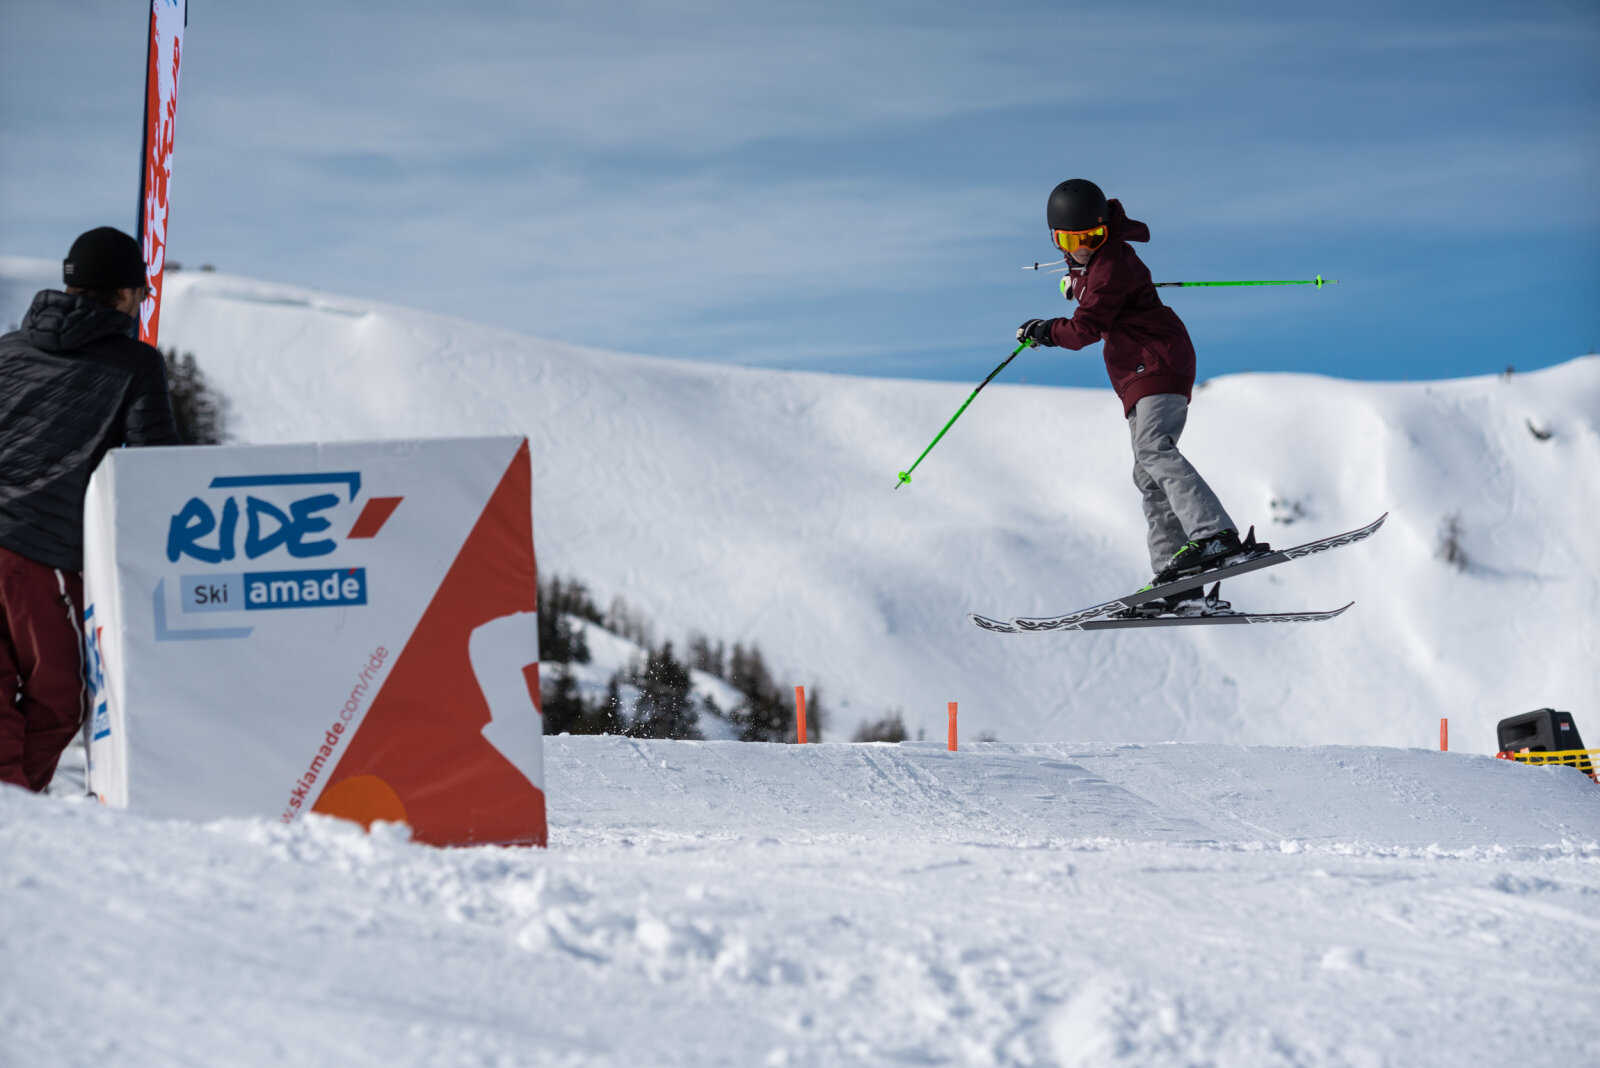 Cwww.grossarltal.info-I-Ski-amade-Cash4Tricks-Tour---Open-Air-in-the-Snowparks-of-Ski-amade-1.jpg